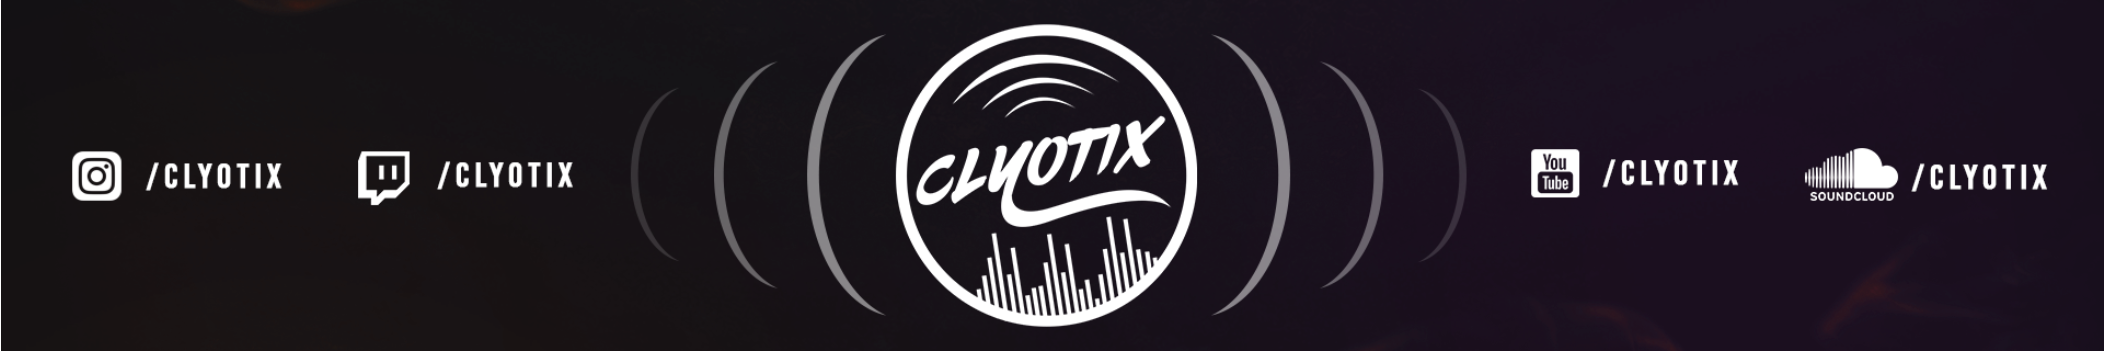 Clyotix